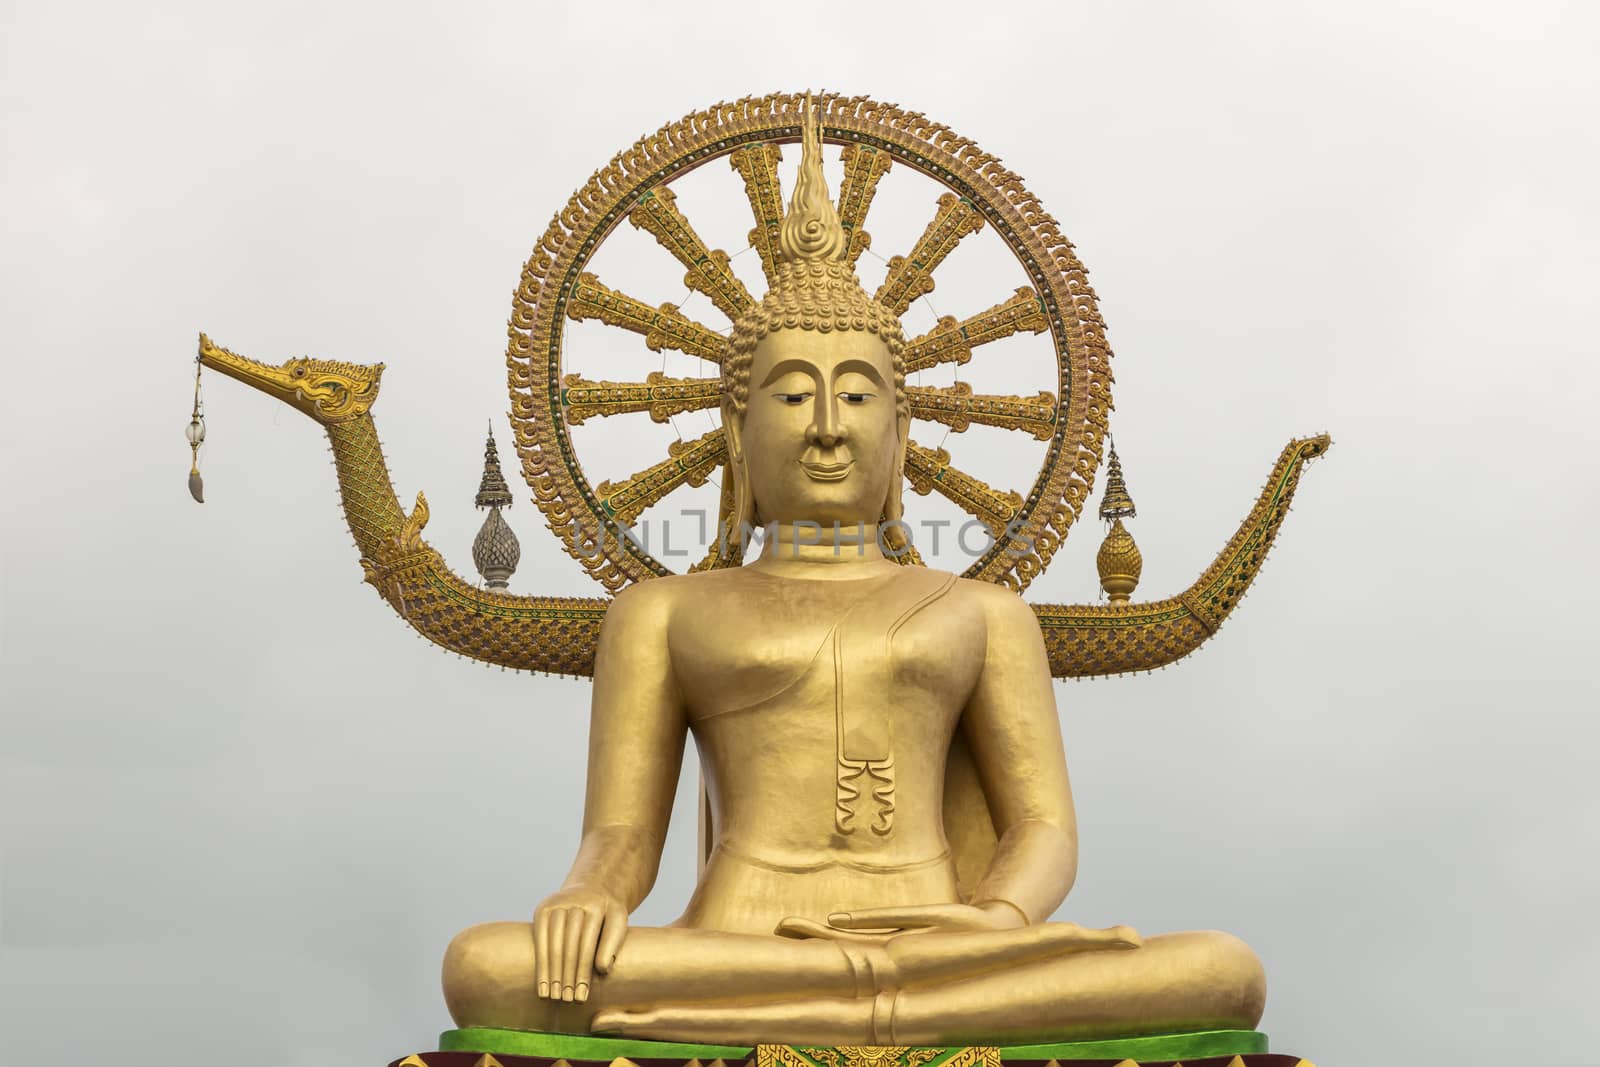 Giant and golden Big Buddha statue in Wat Phra Yai temple Koh Samui island in Surat Thani, Thailand.